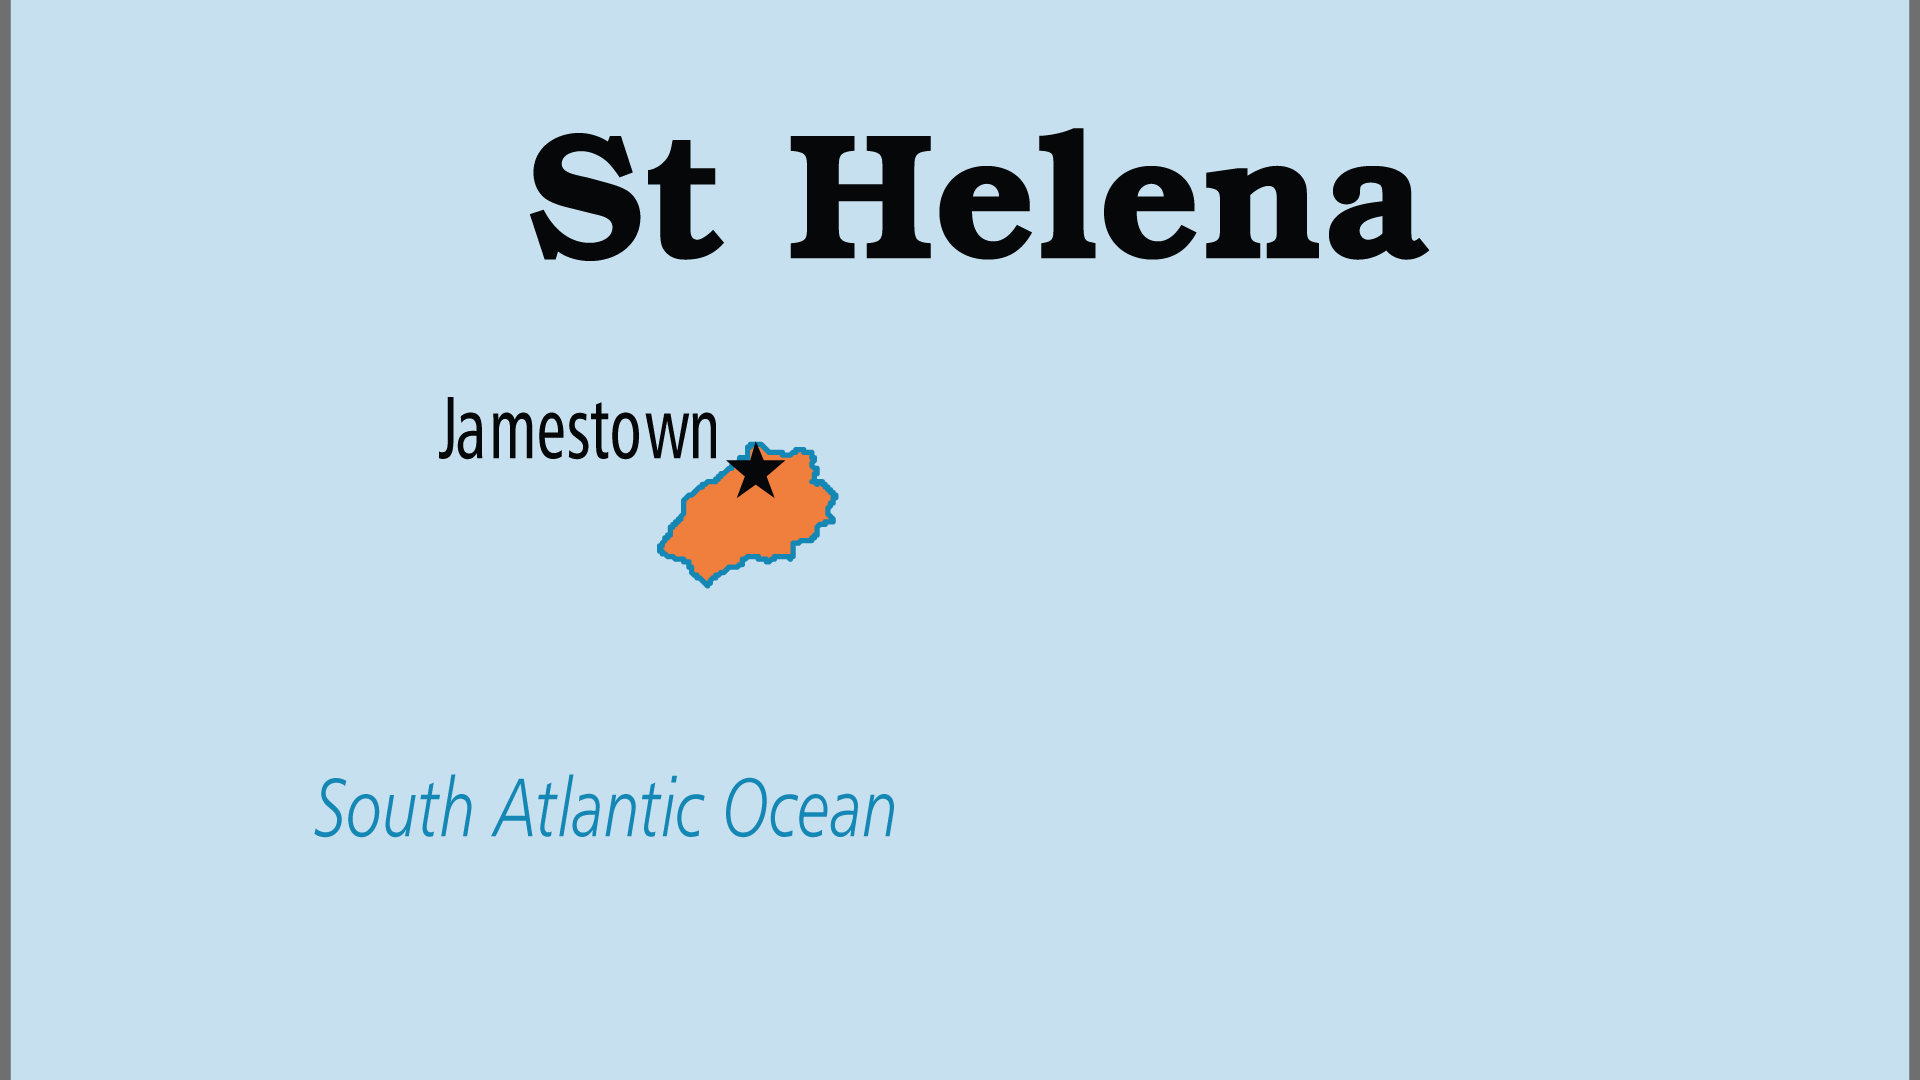 Saint Helena (Operation World)